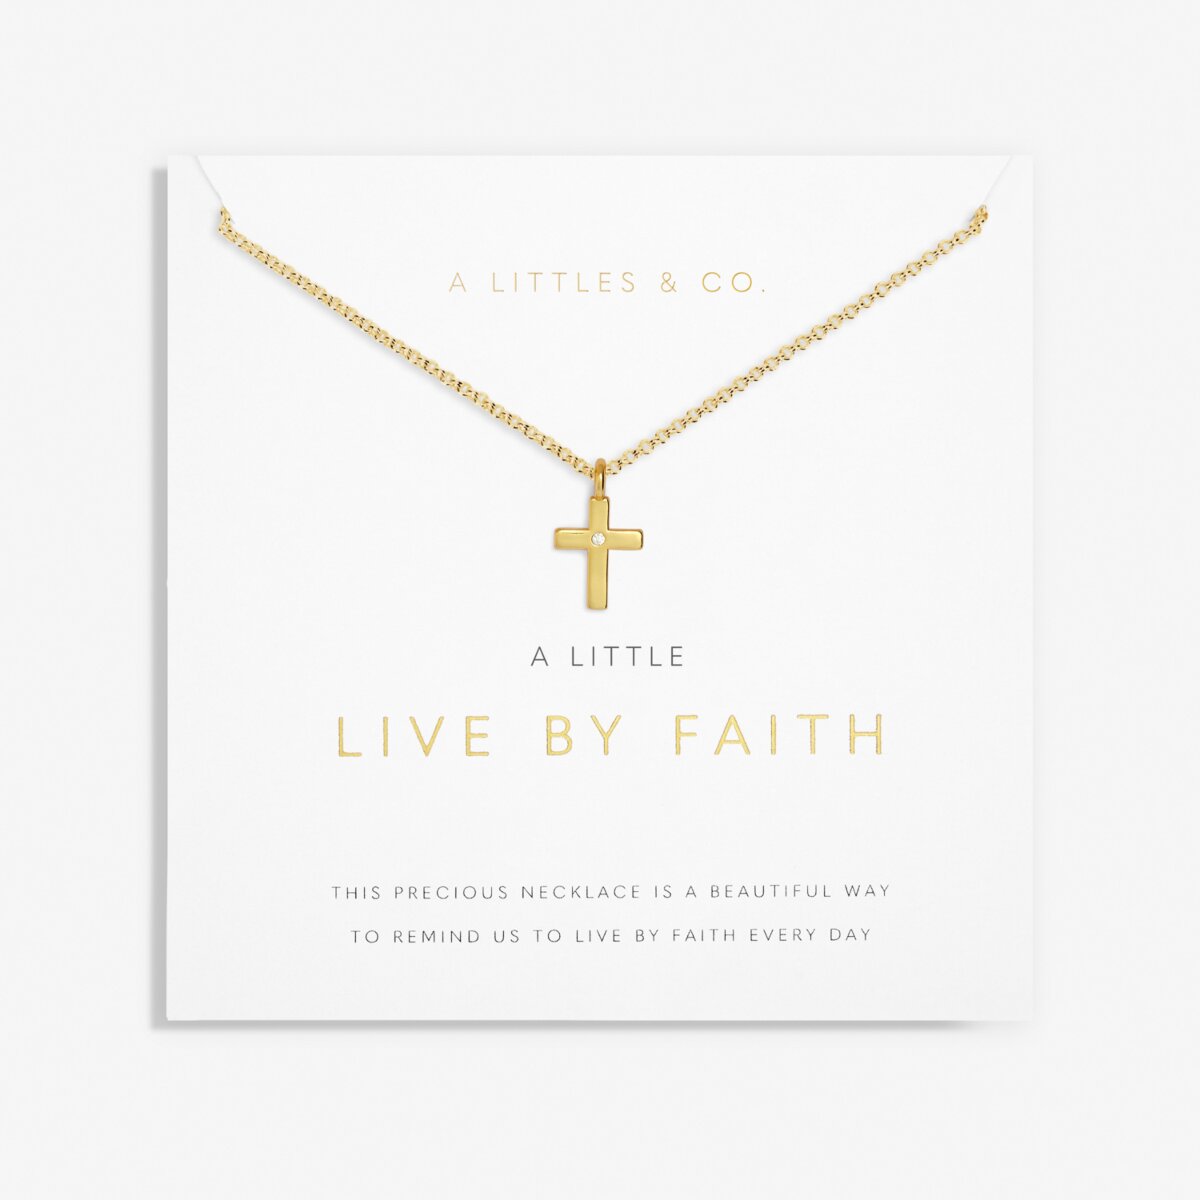 A Little "Live by Faith" Necklace